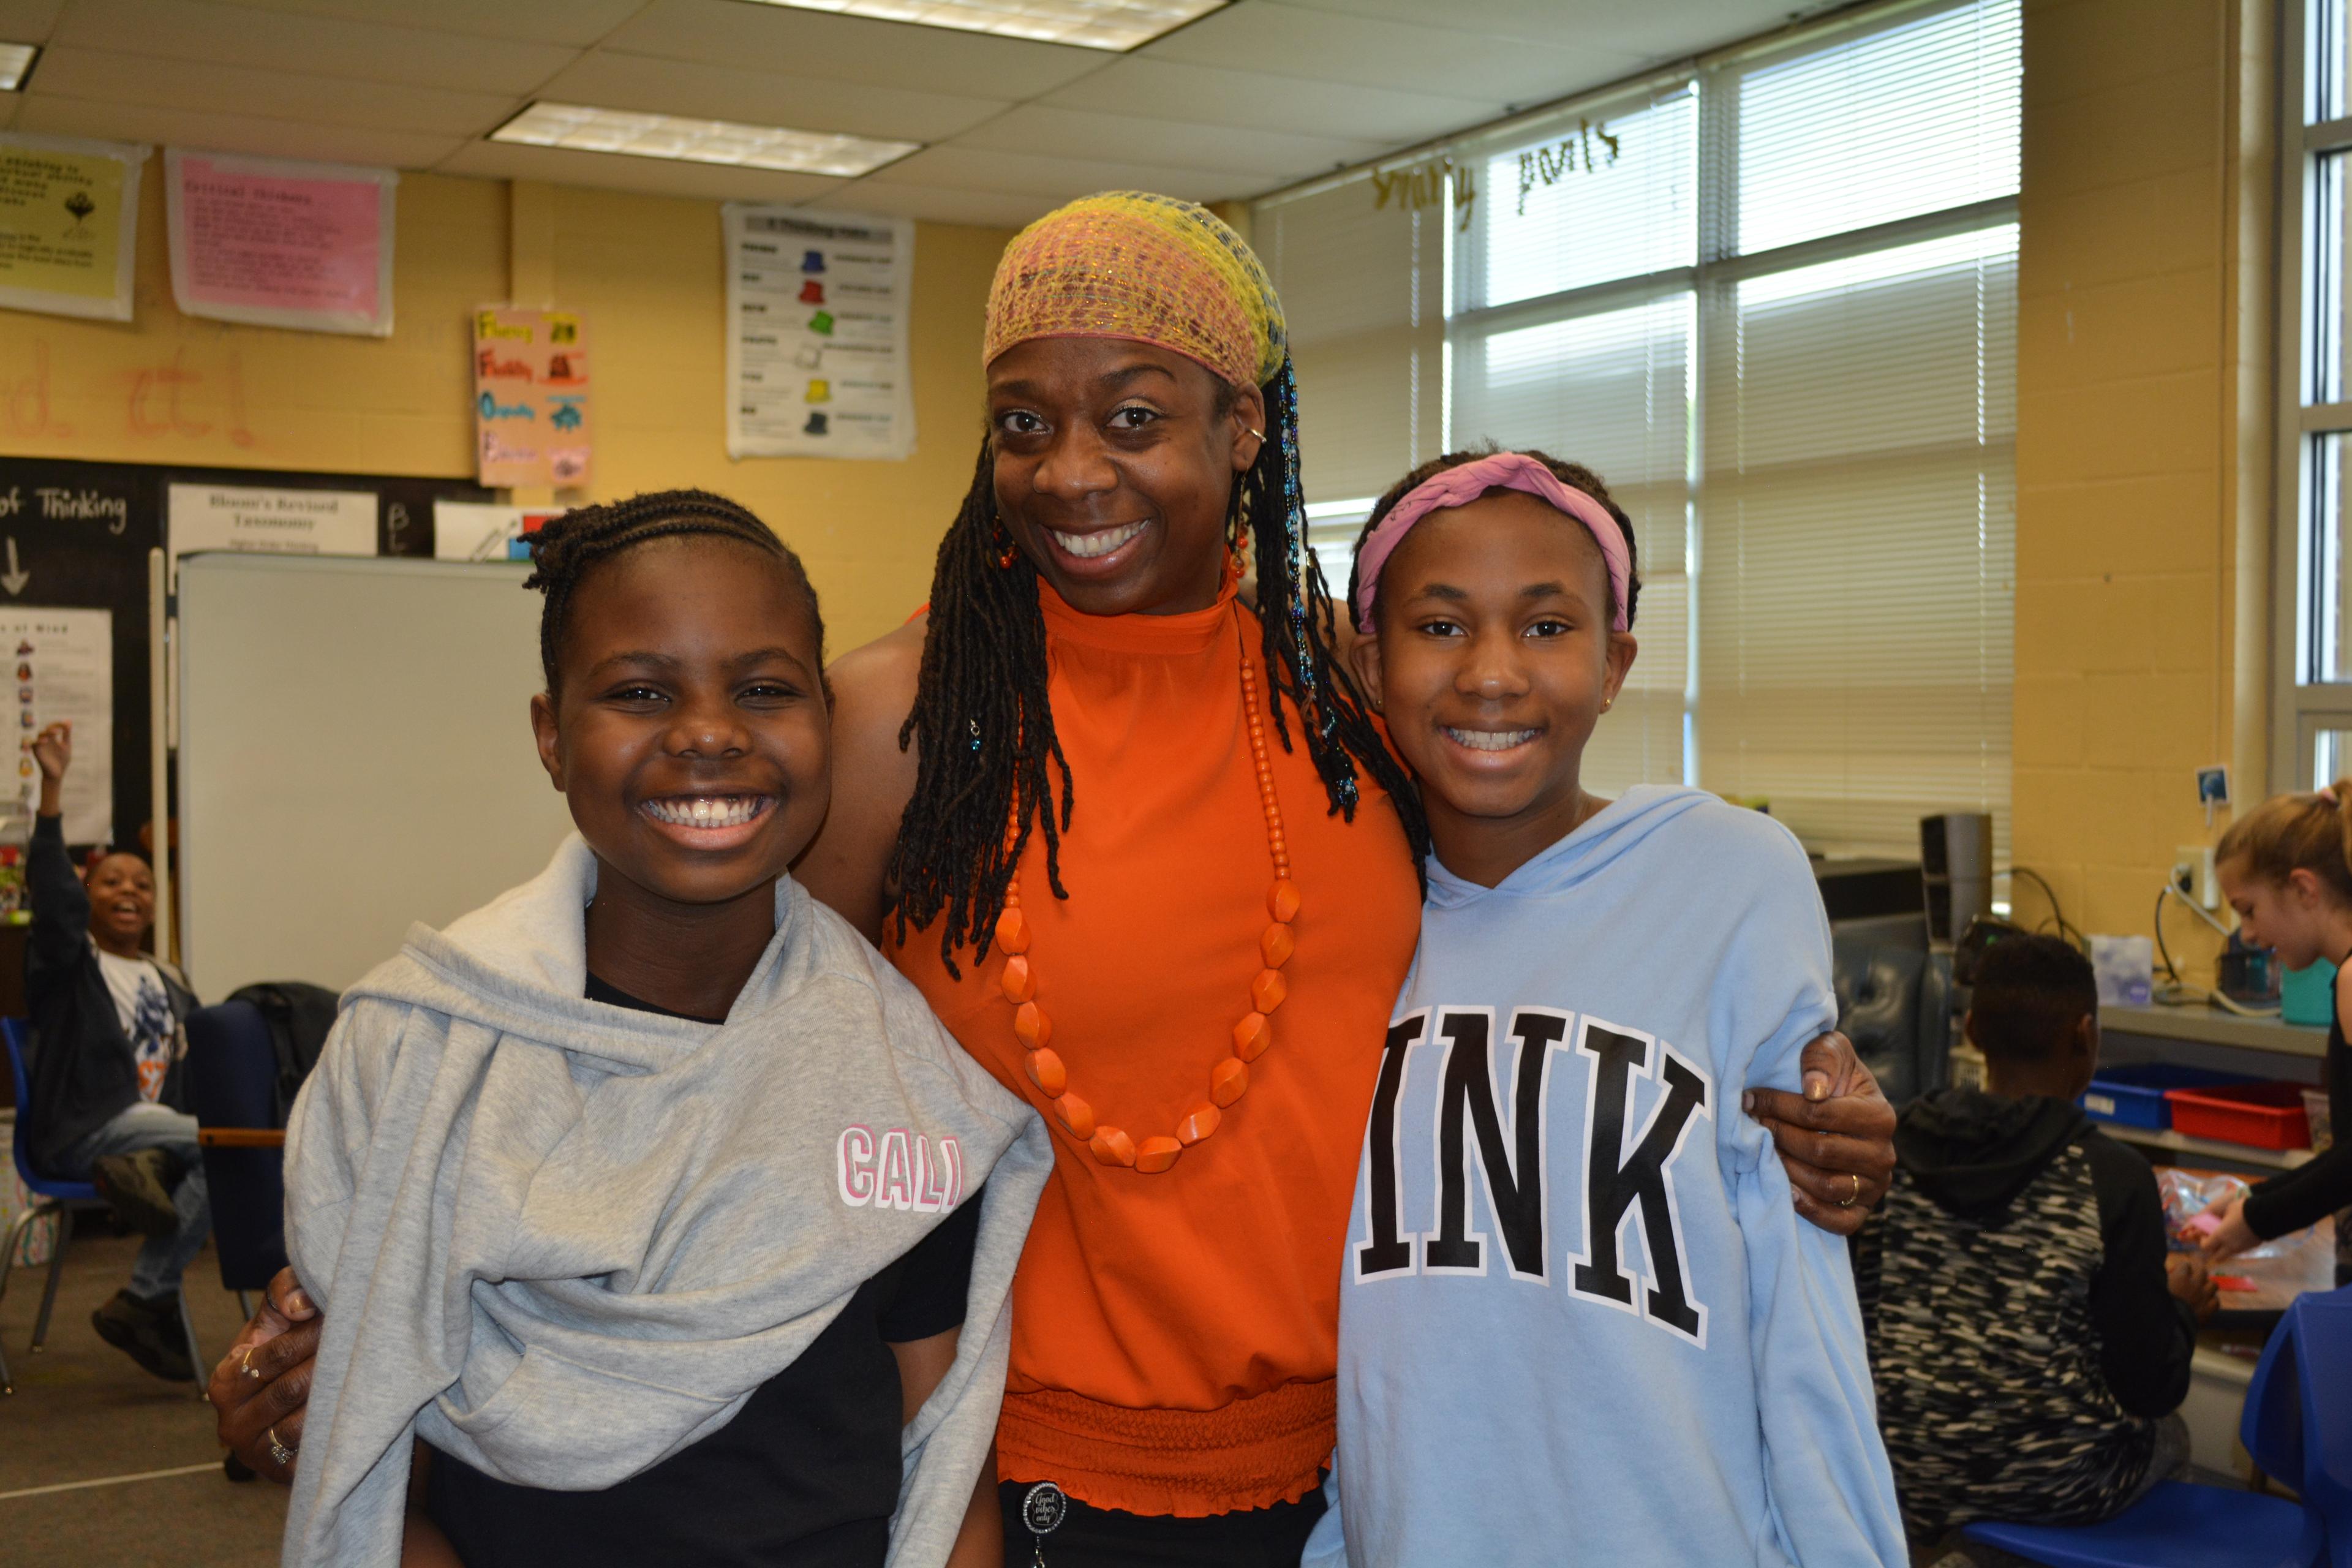 Ta-Tanisha and two students smiling